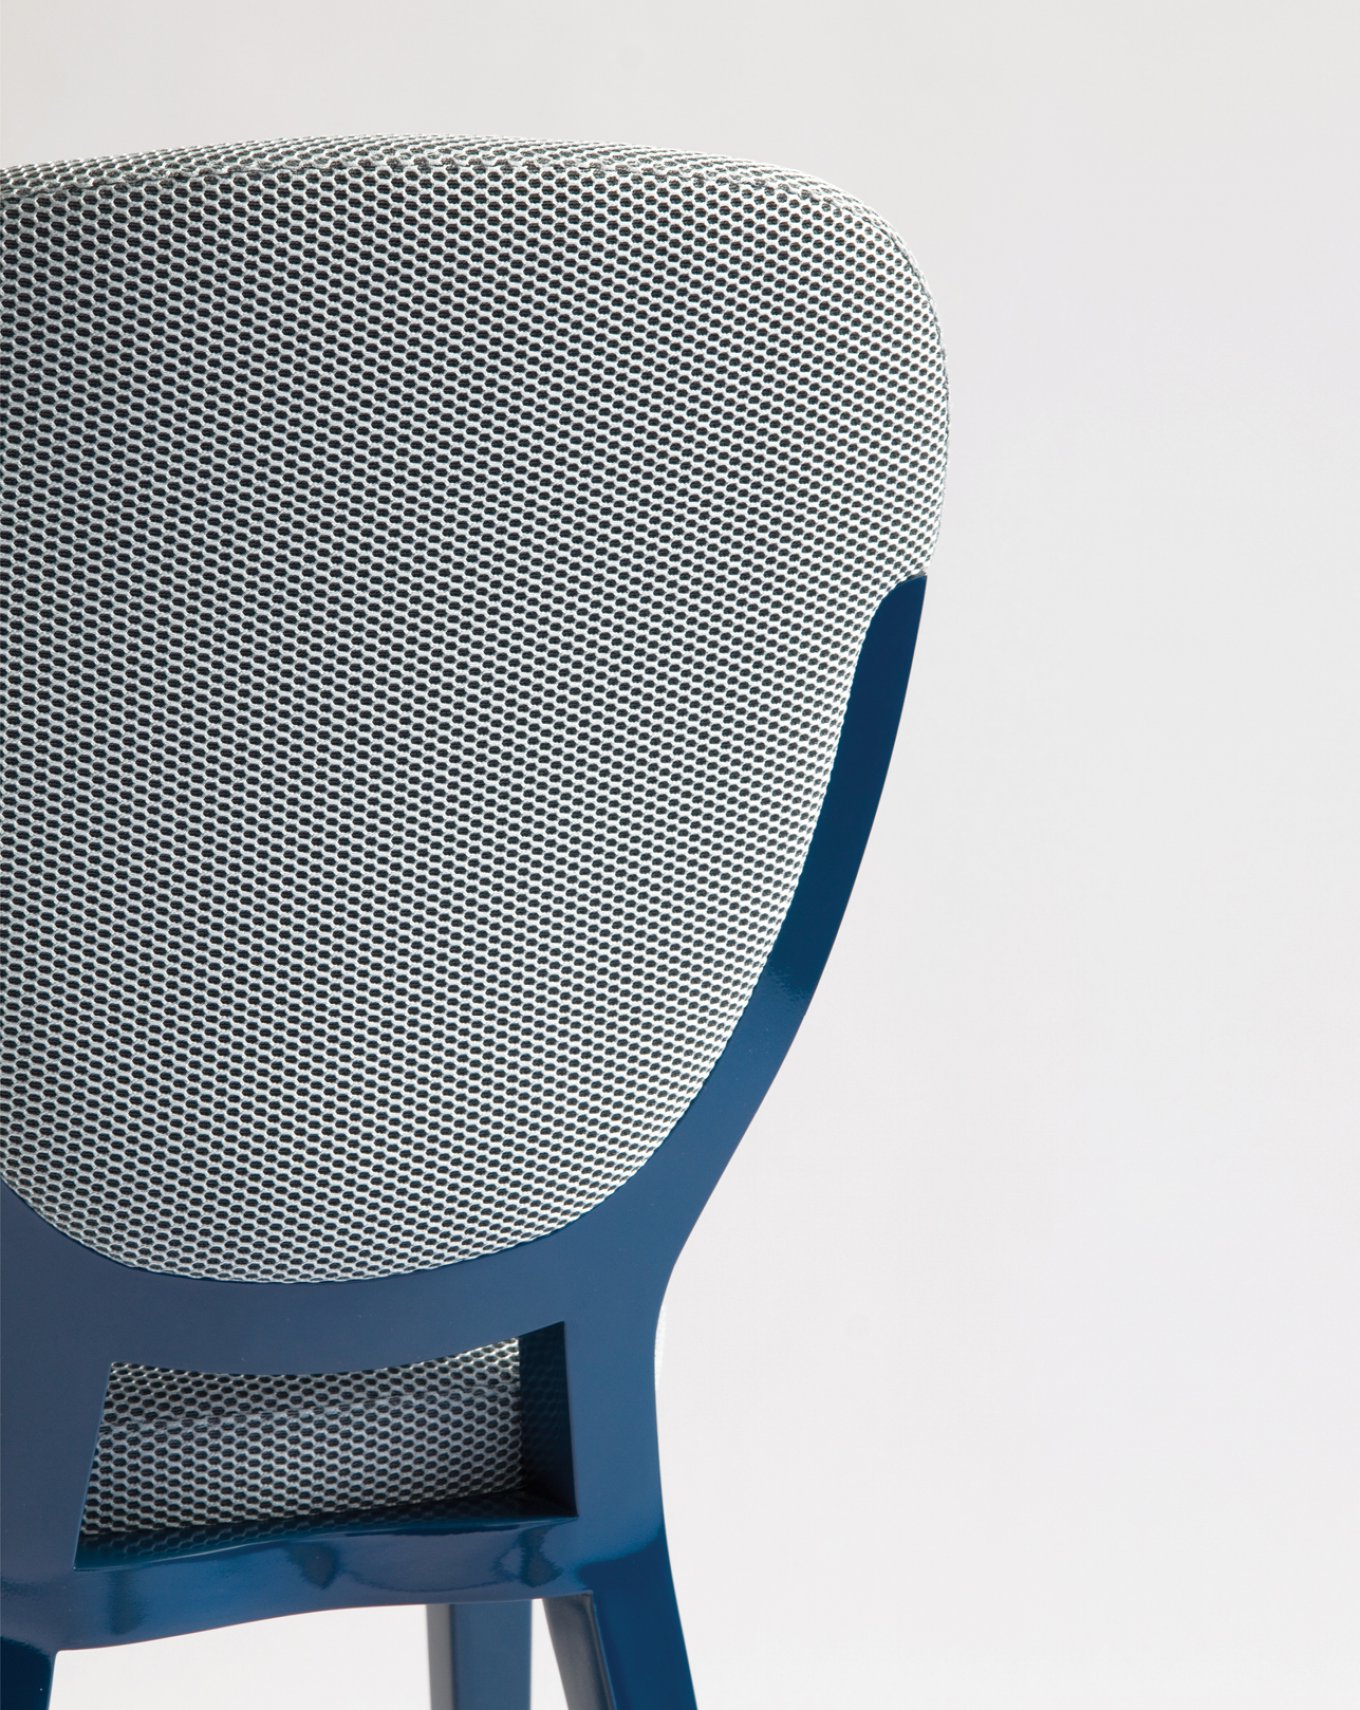 studio catoir collection design chair josephine 3